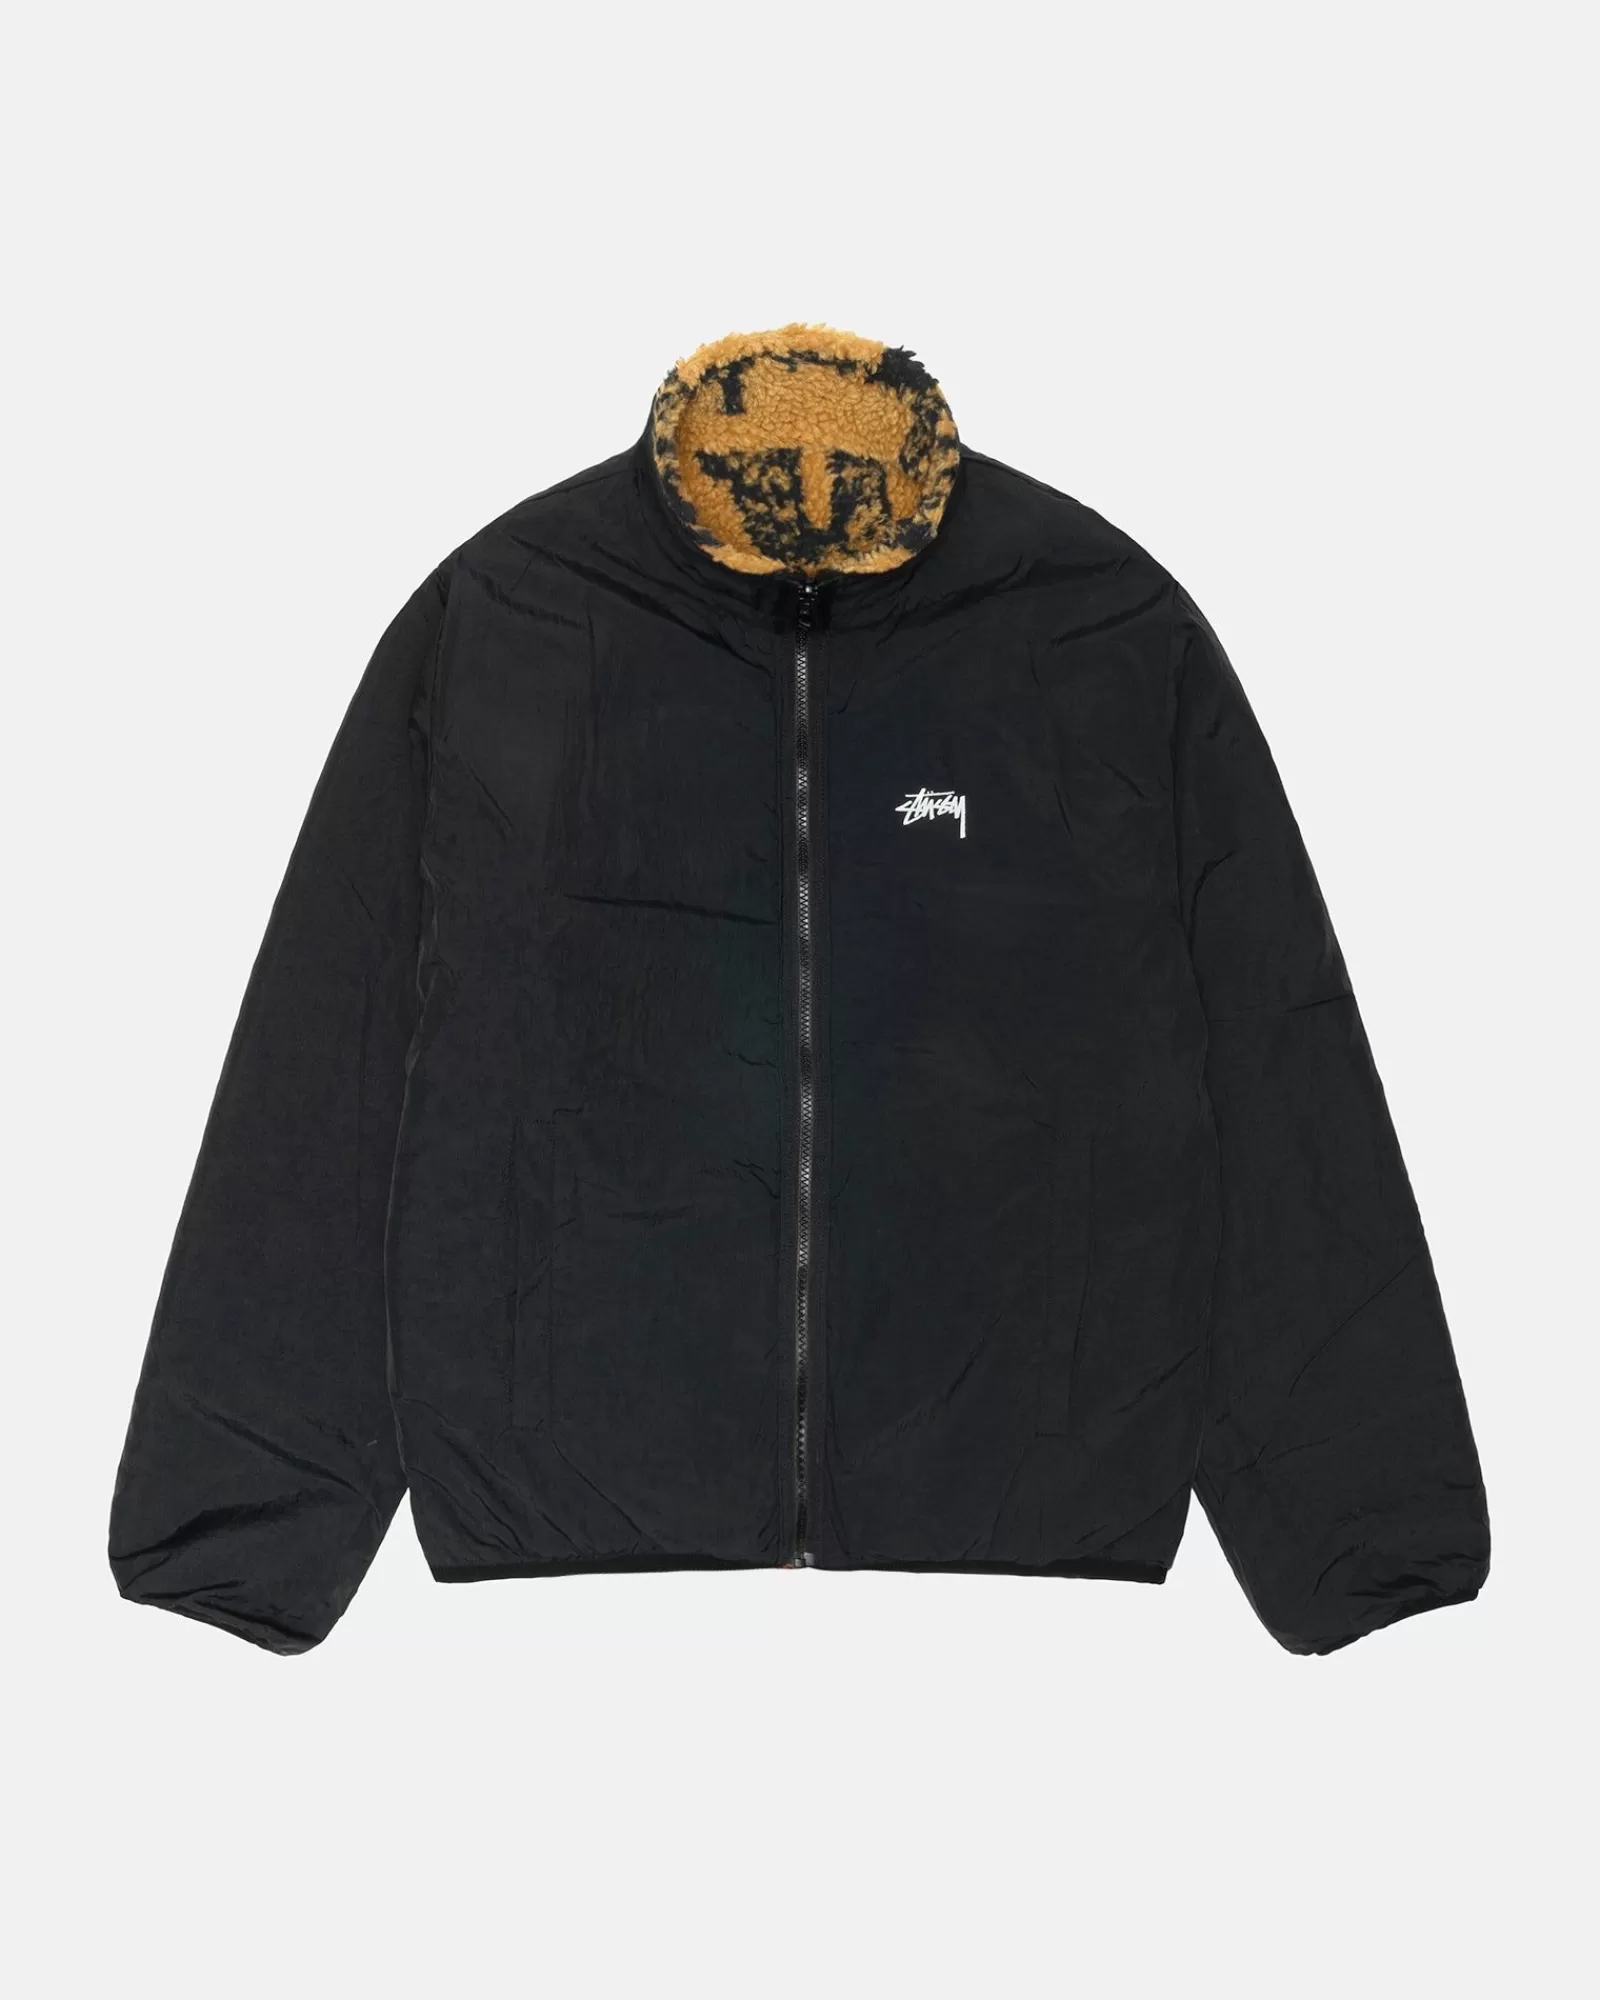 Stüssy Sherpa Reversible Printed Jacket Flash Sale